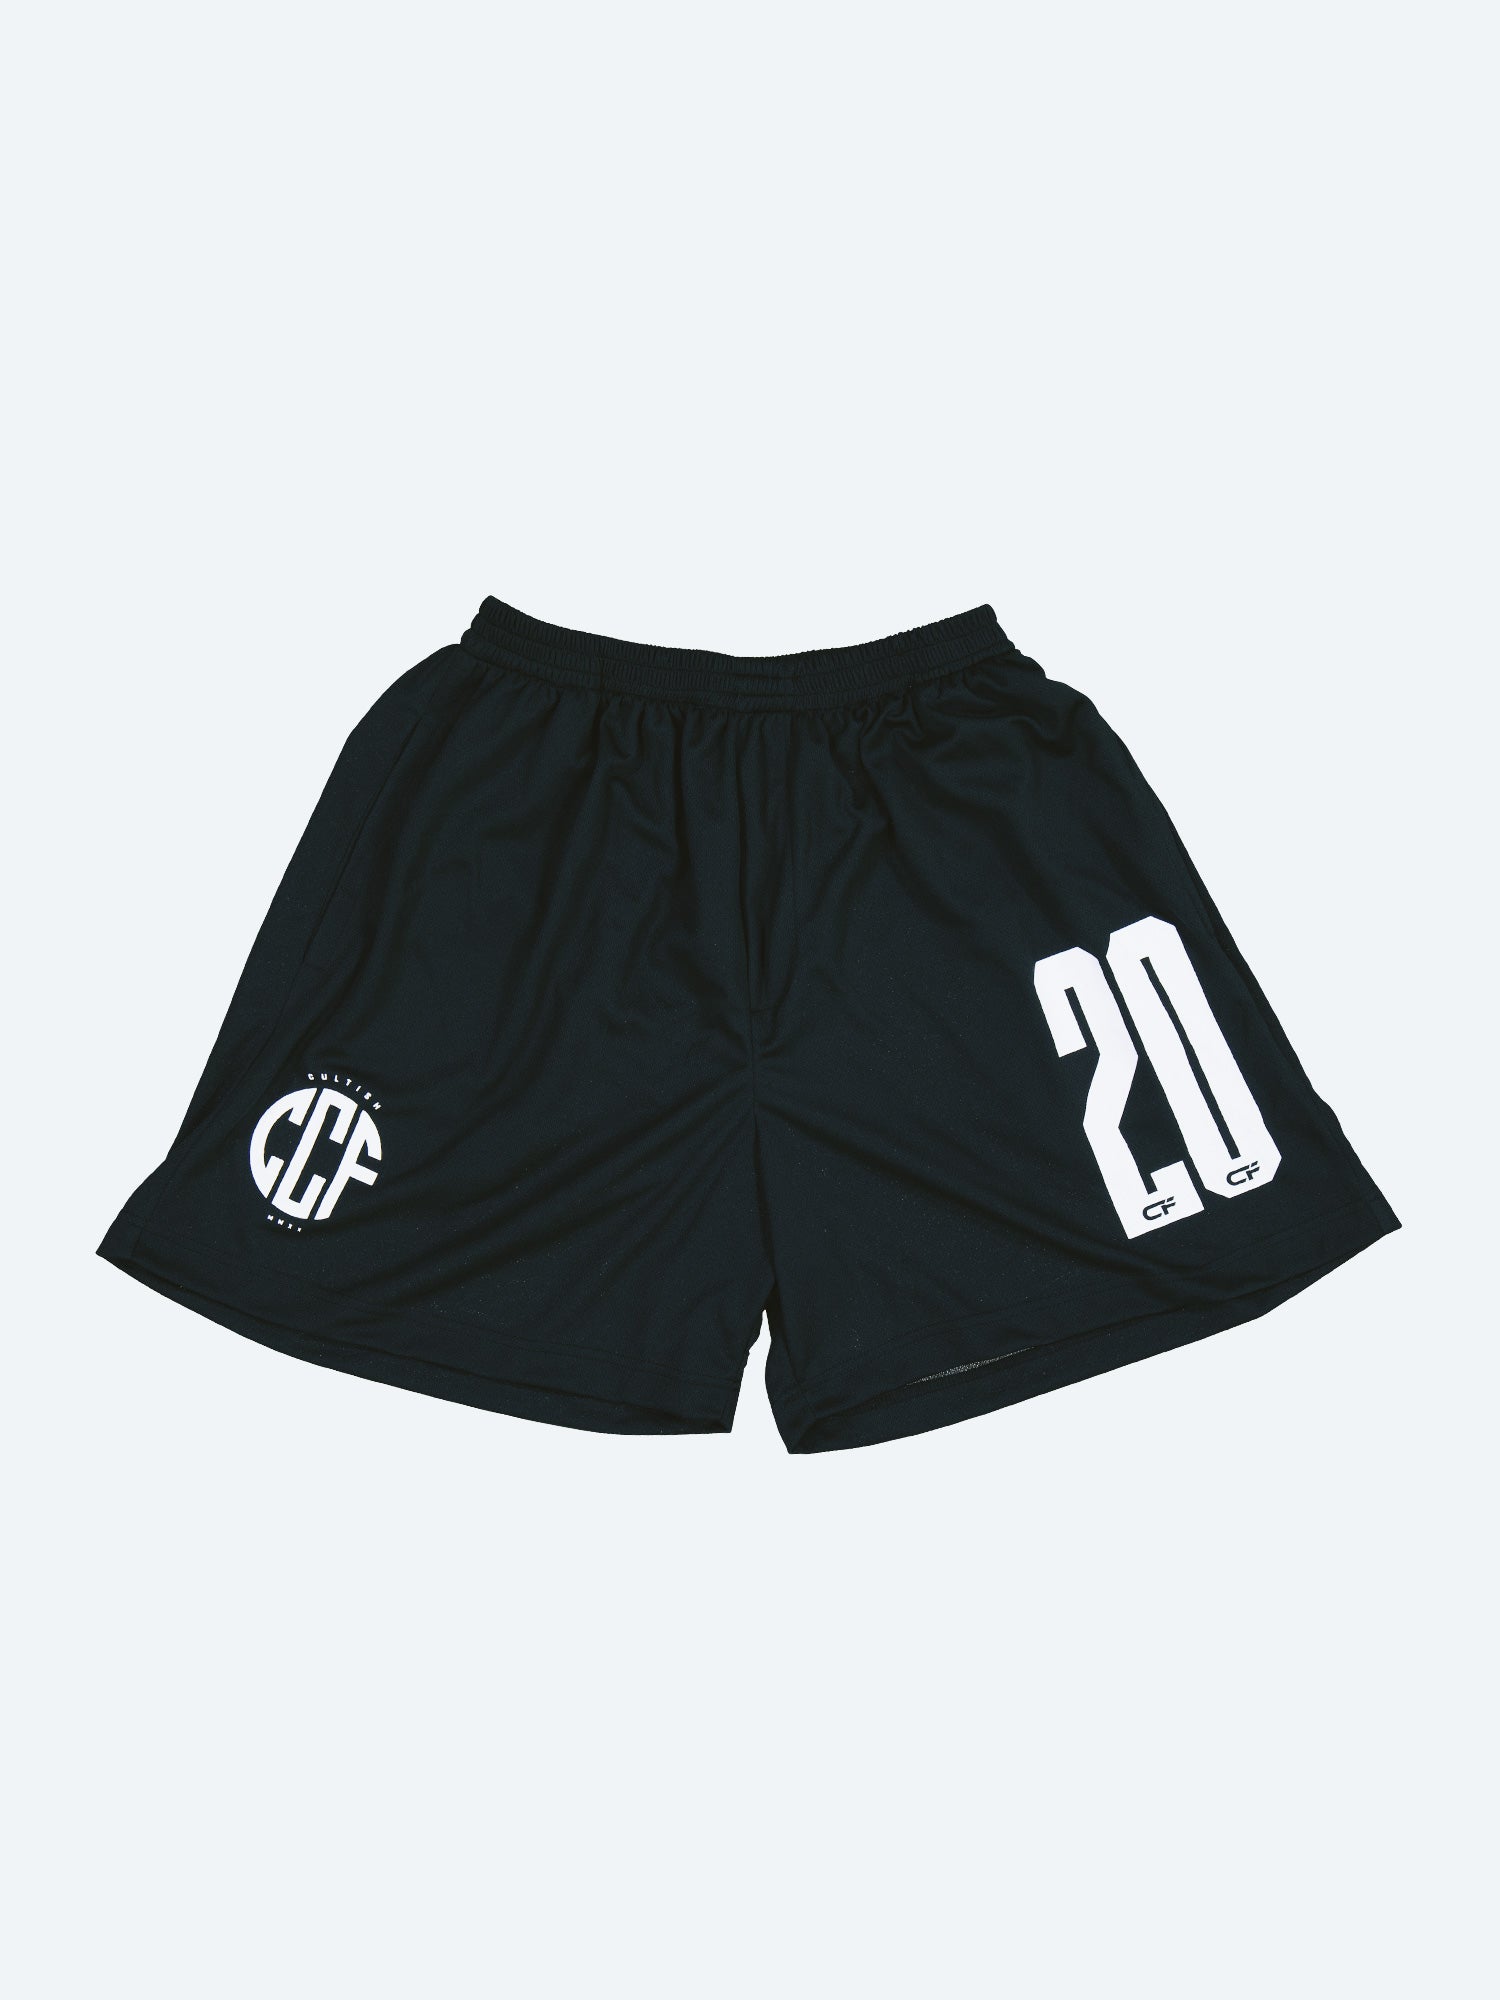 CCF Home Shorts / Black